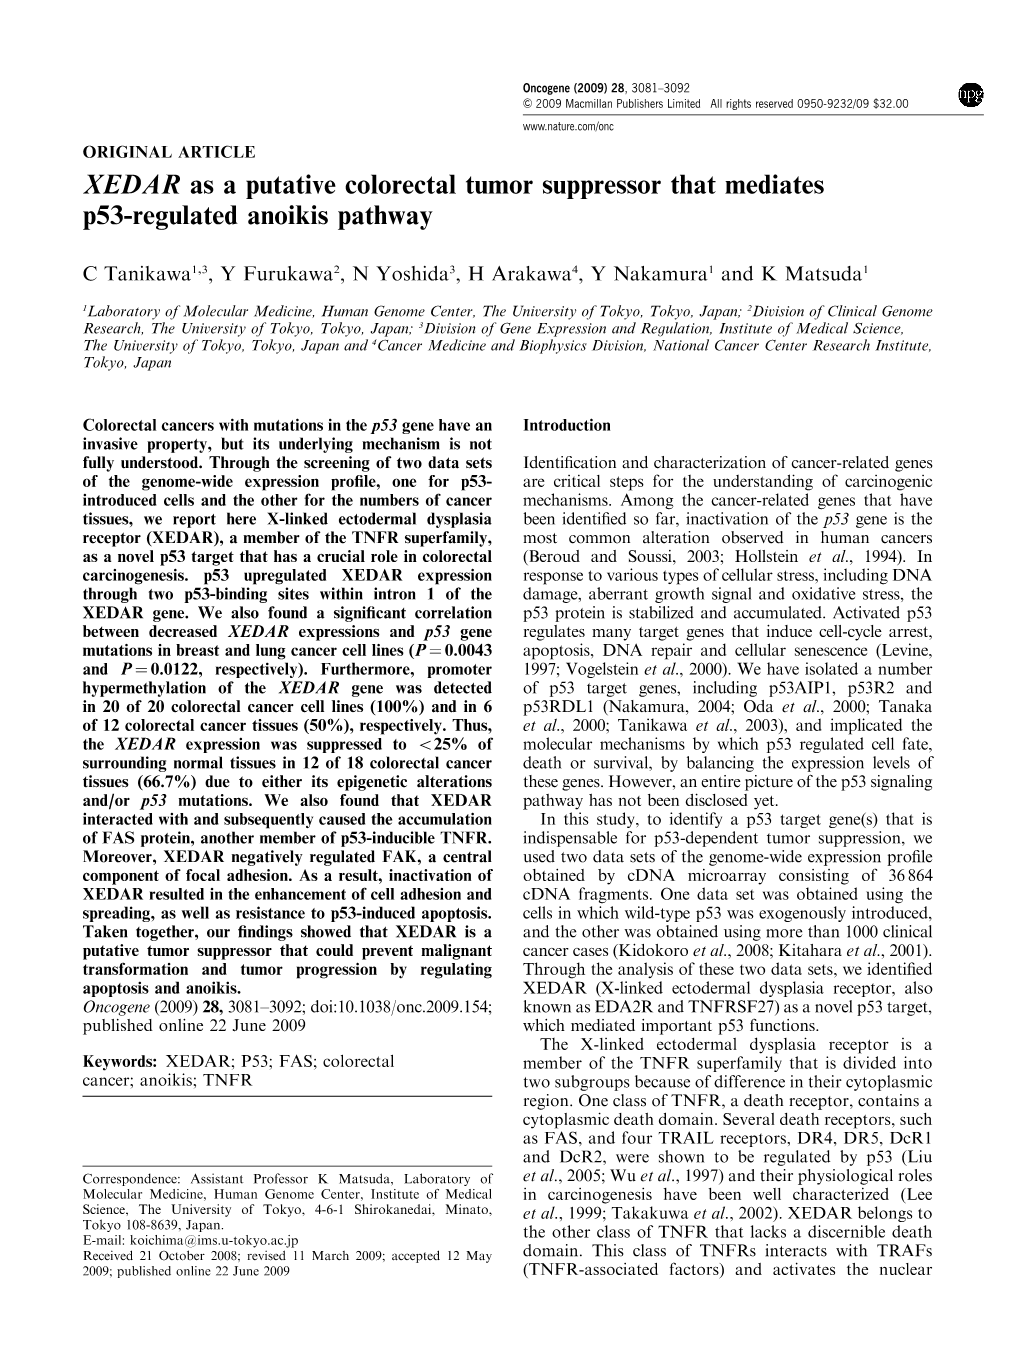 XEDAR As a Putative Colorectal Tumor Suppressor That Mediates P53-Regulated Anoikis Pathway